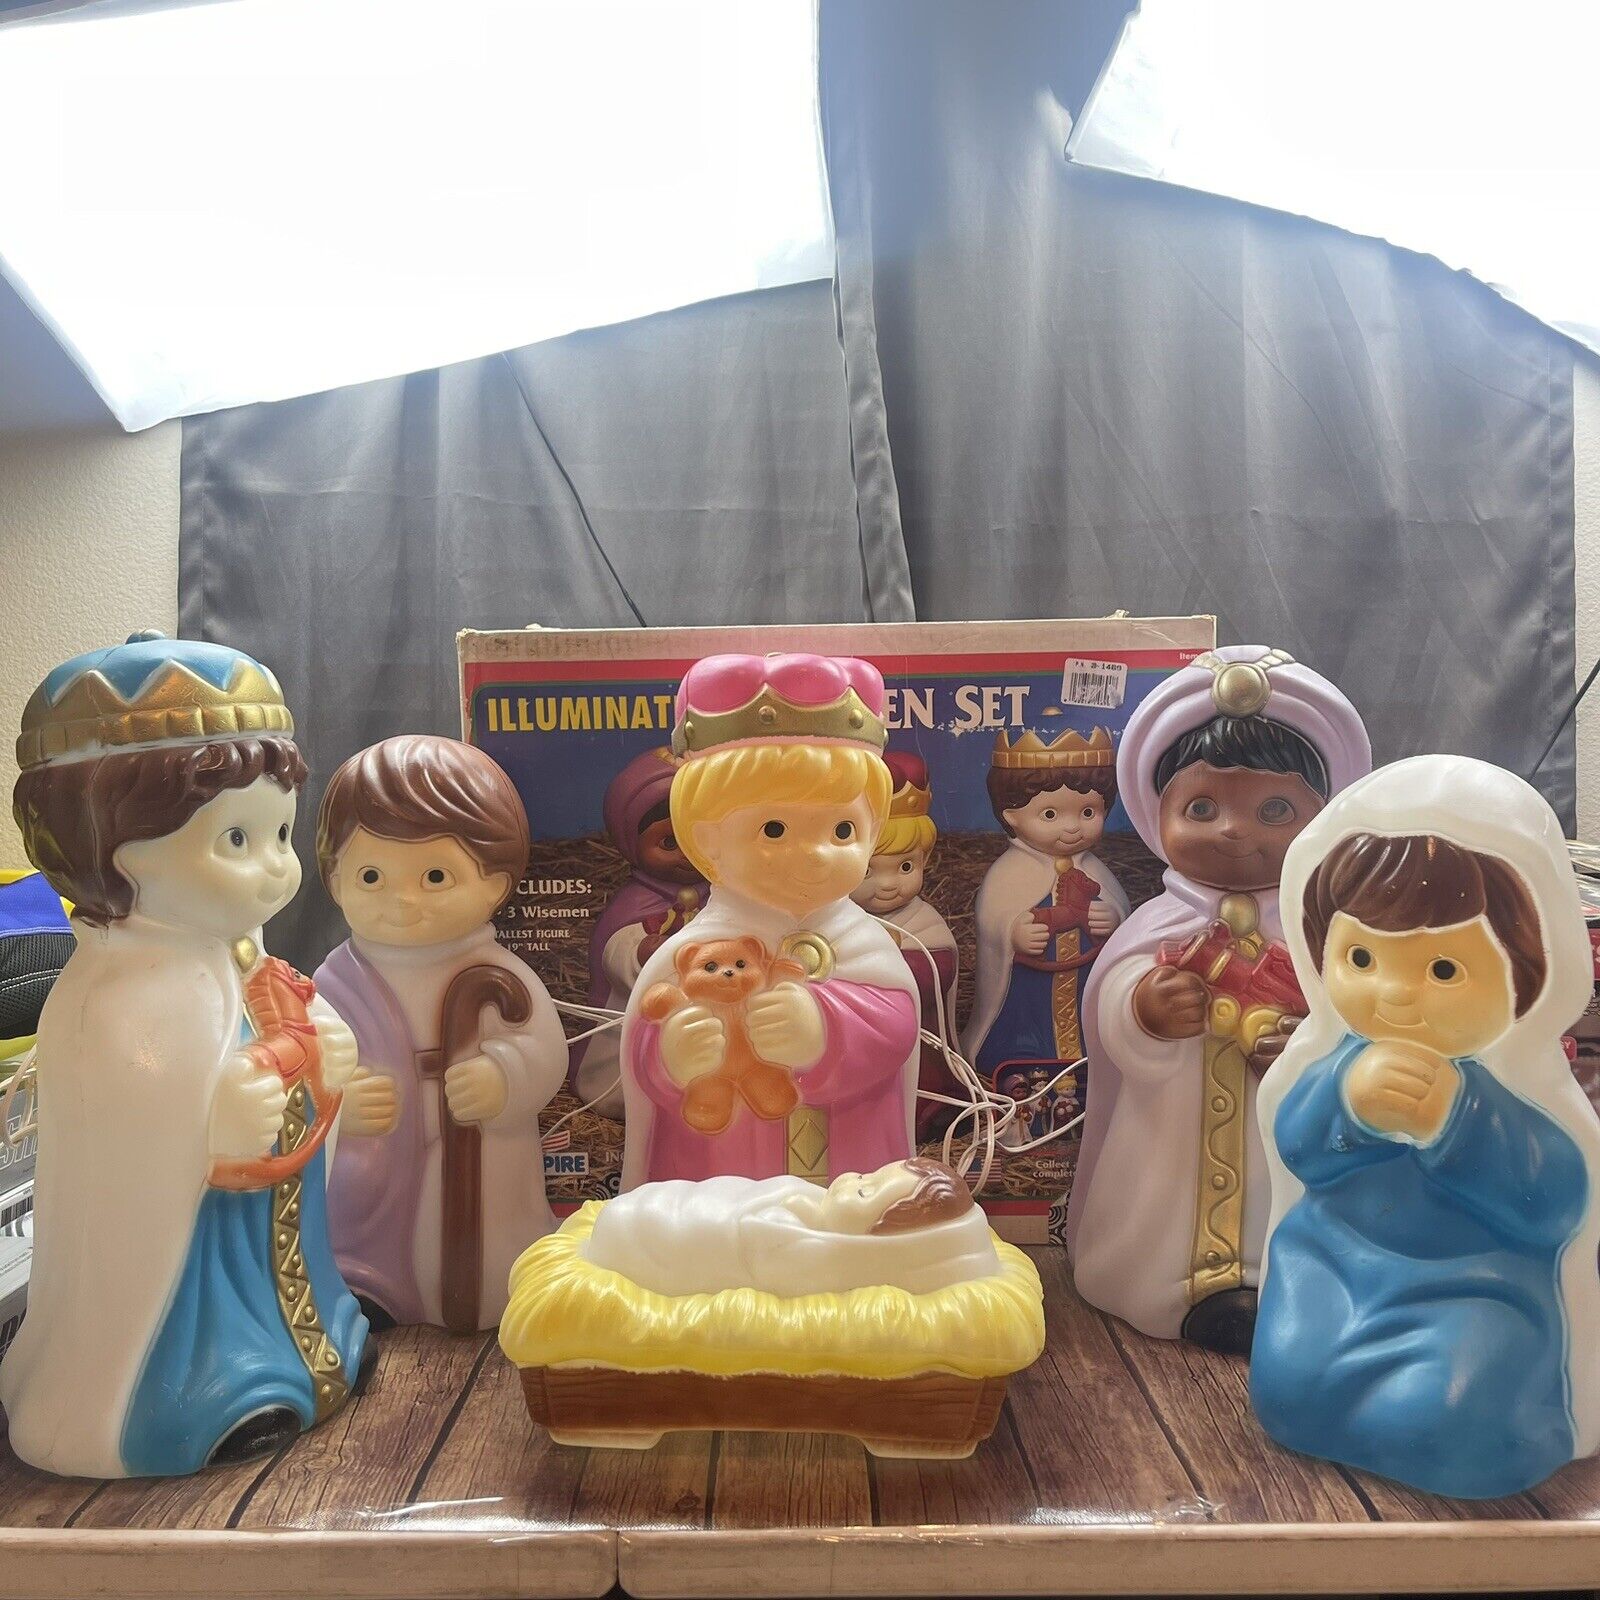 Vintage Empire Blow Mold Illuminated Child Nativity Set Of 6 Wisemen Kings +